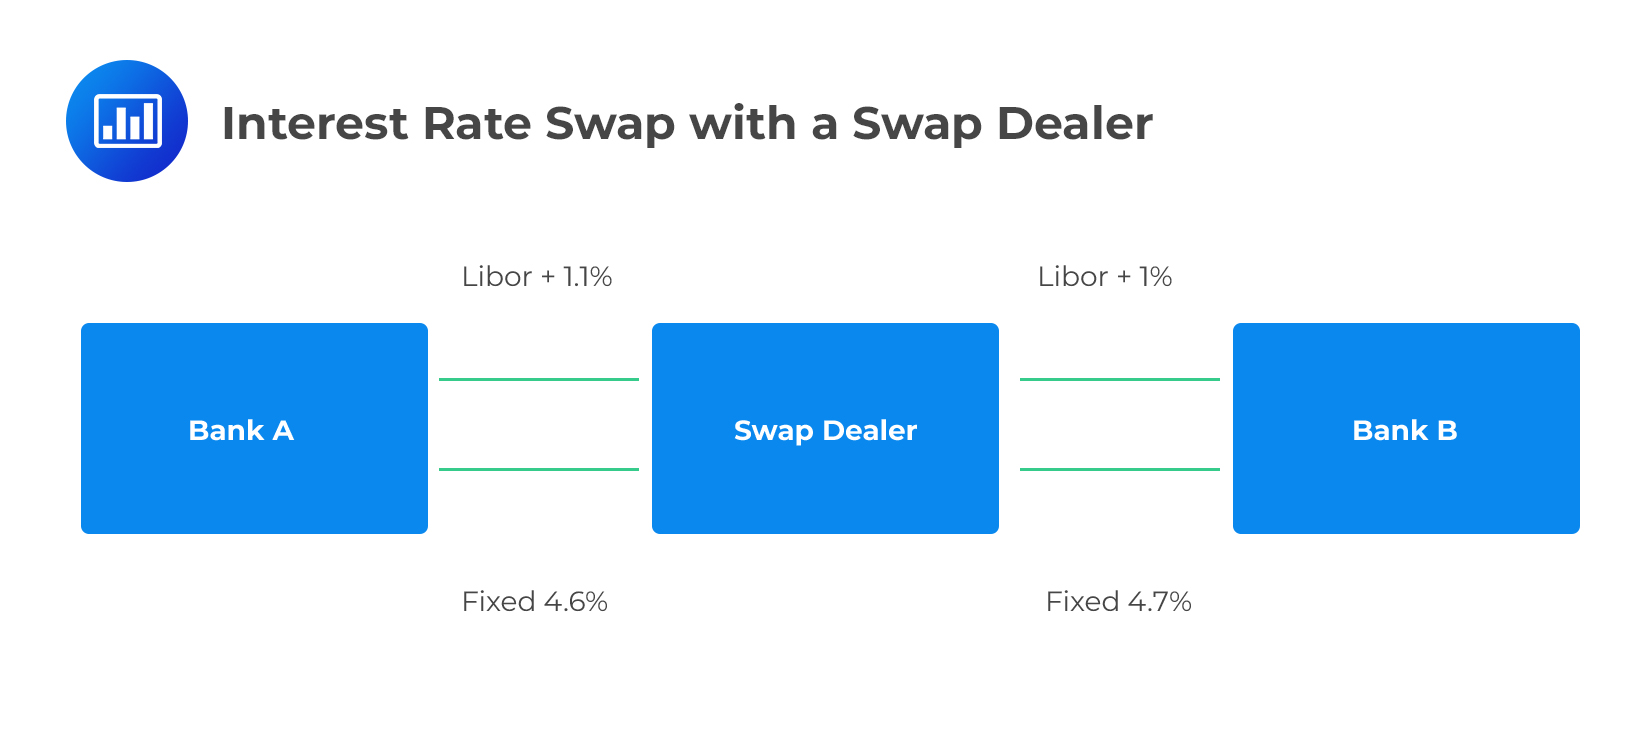 Interest Rate Swap with a Swap Dealer